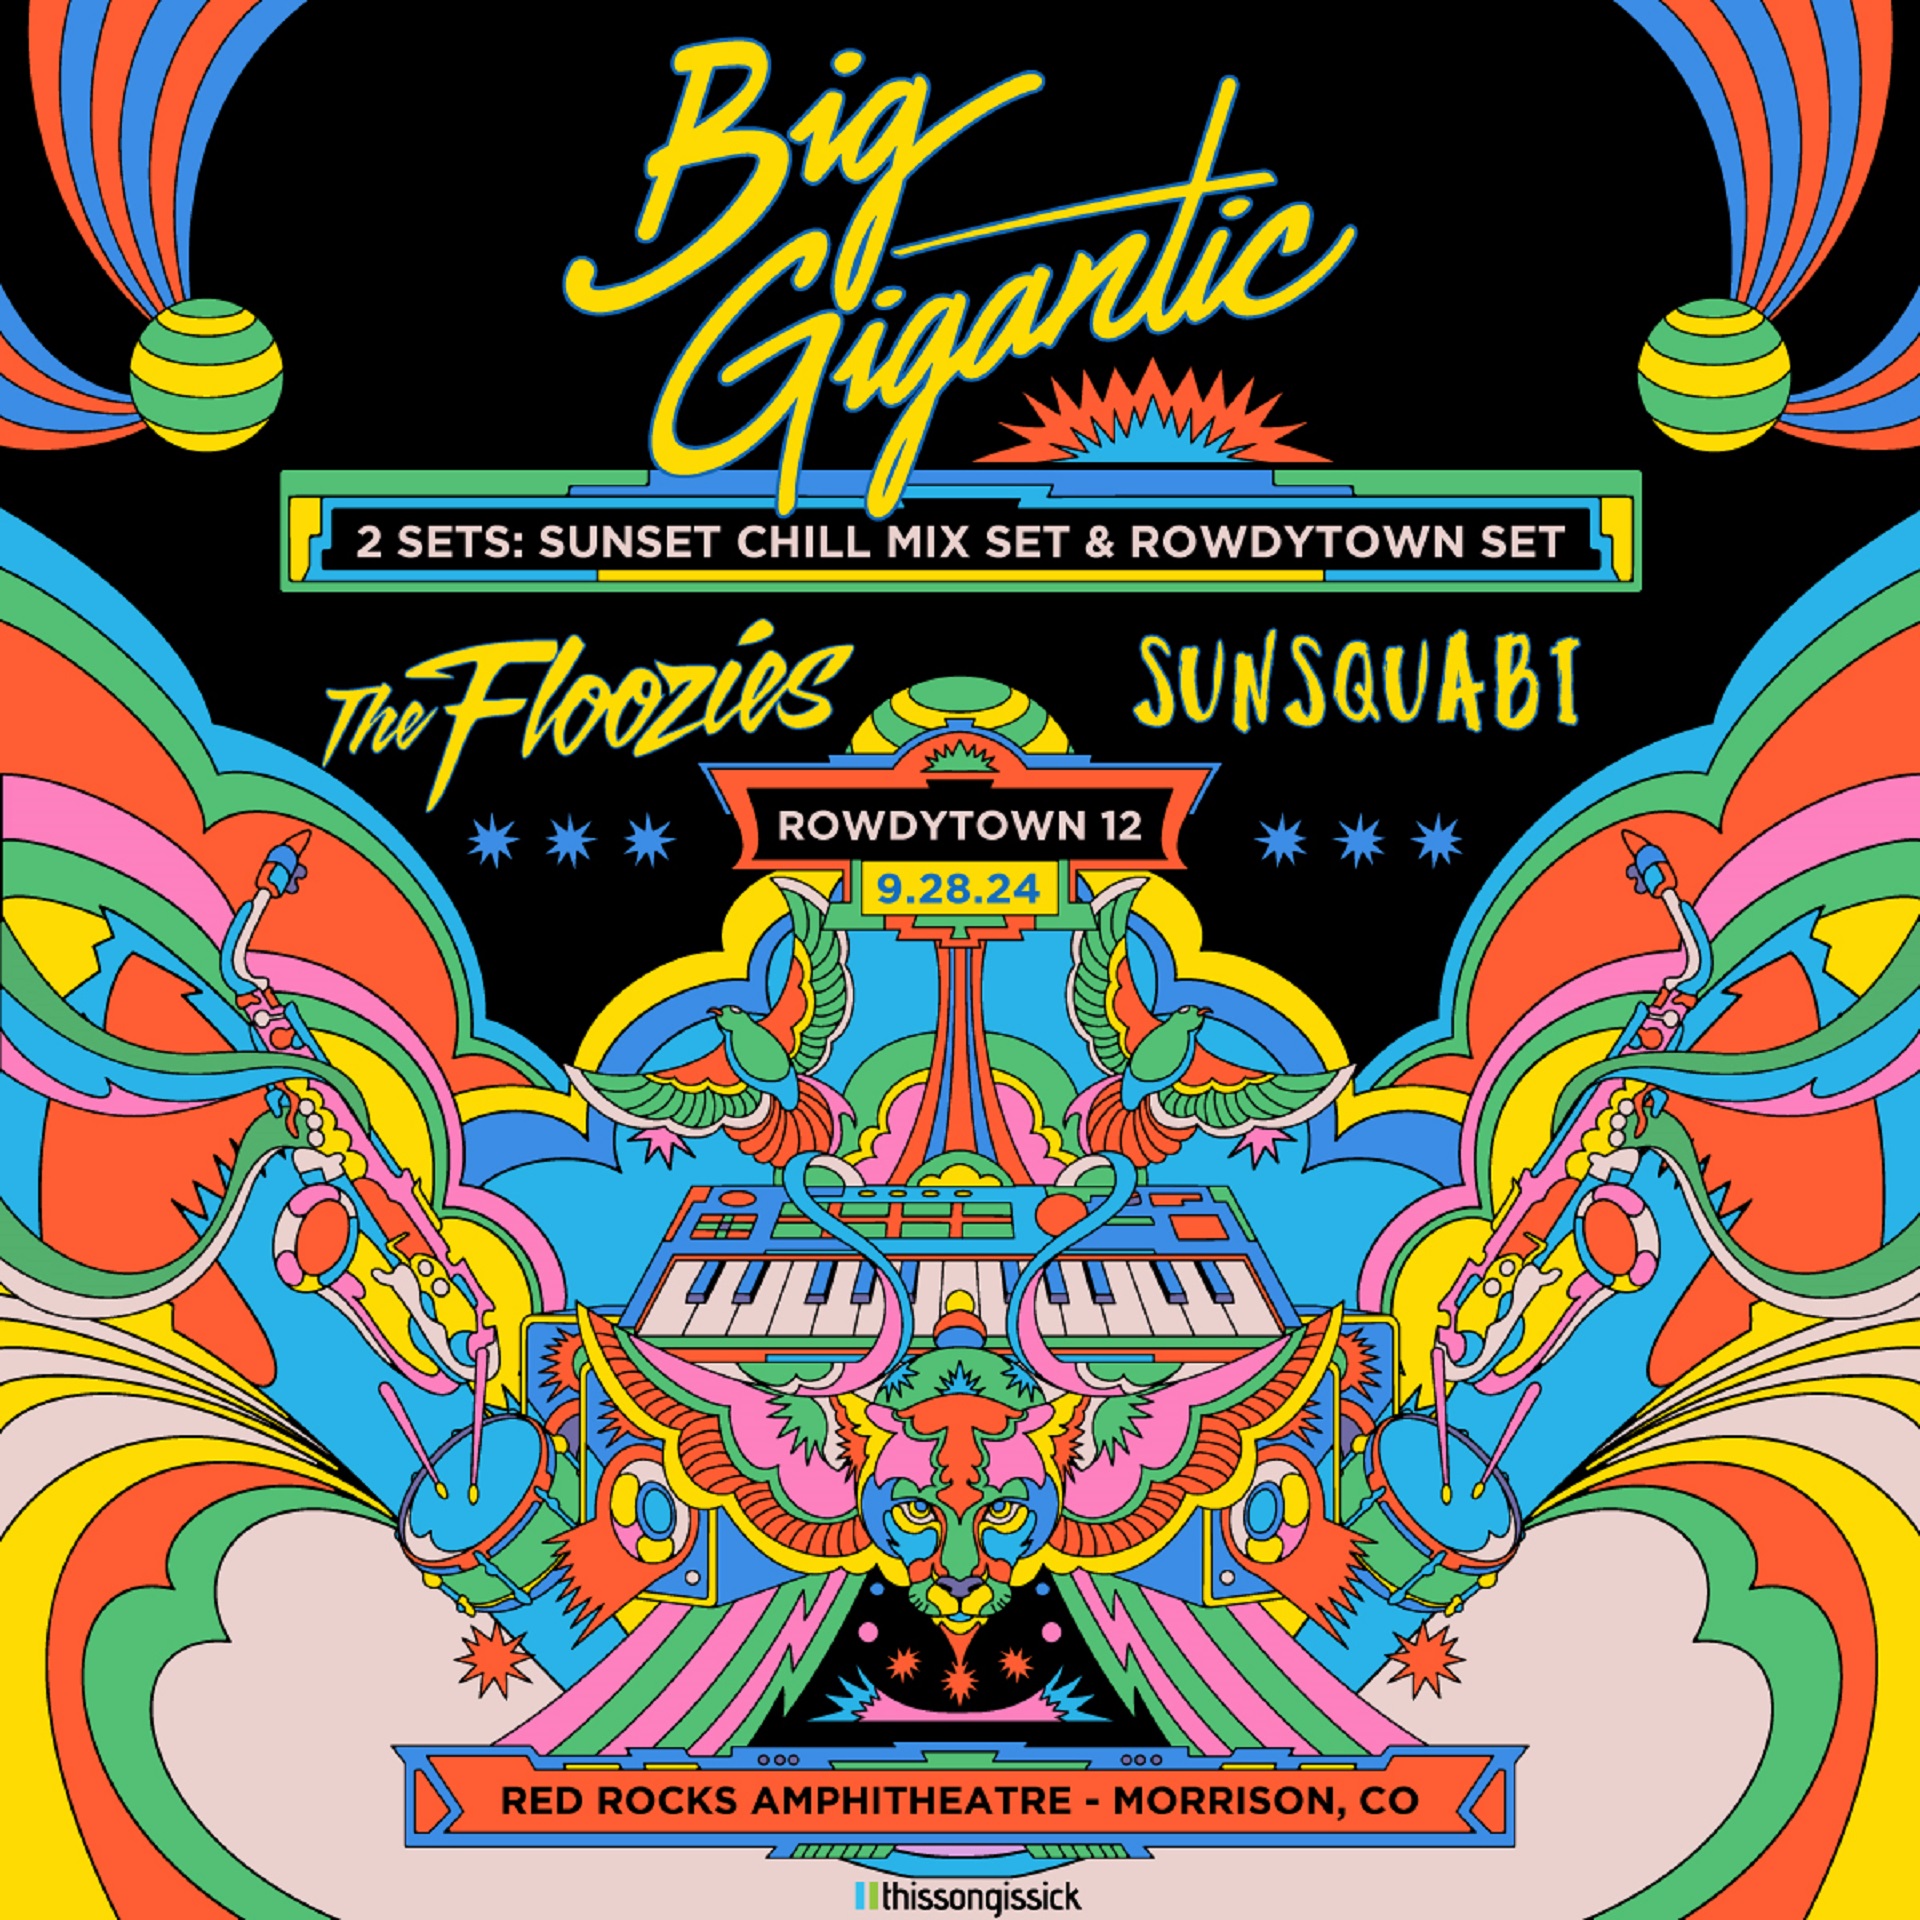 AEG Presents Announces BIG GIGANTIC Live at Red Rocks Amphitheatre